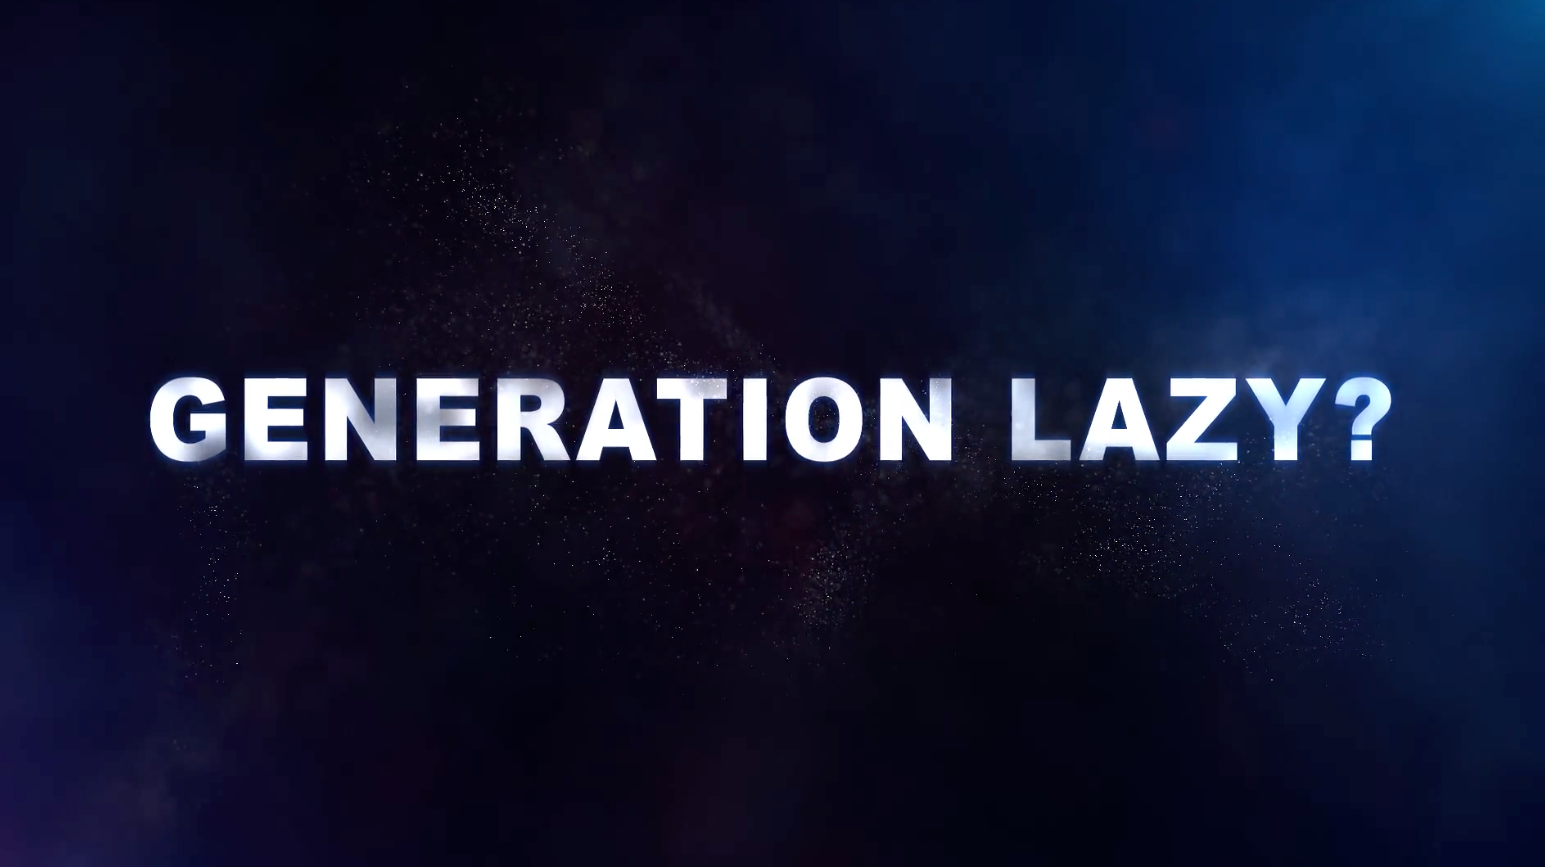 Generation Lazy?